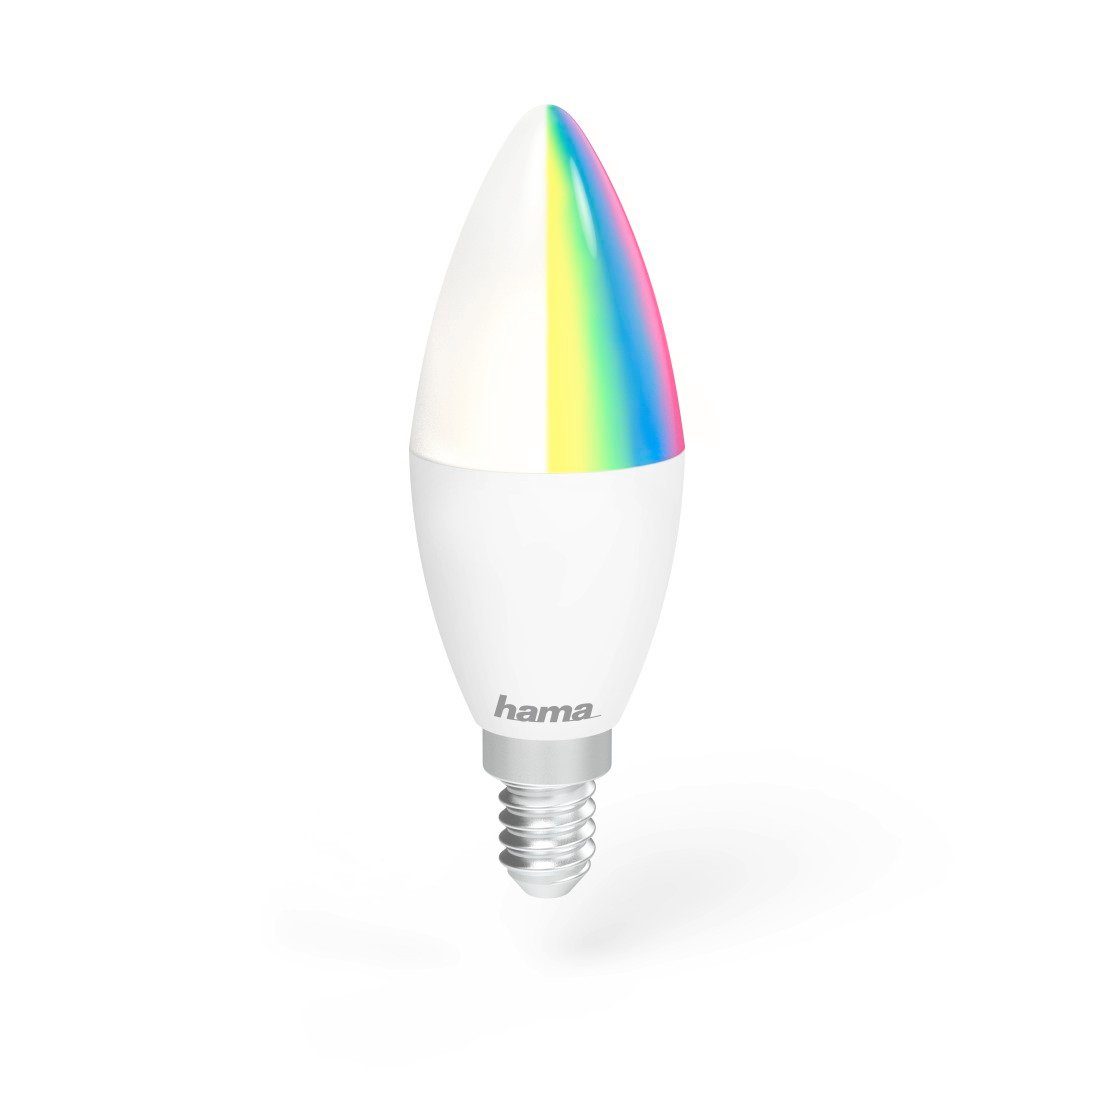 Hama »4,5W, dimmbar, kein Hub nötig« Smarte Lampe, Kerze, Alexa/Google/App  gesteuert, E14, RGB online kaufen | OTTO